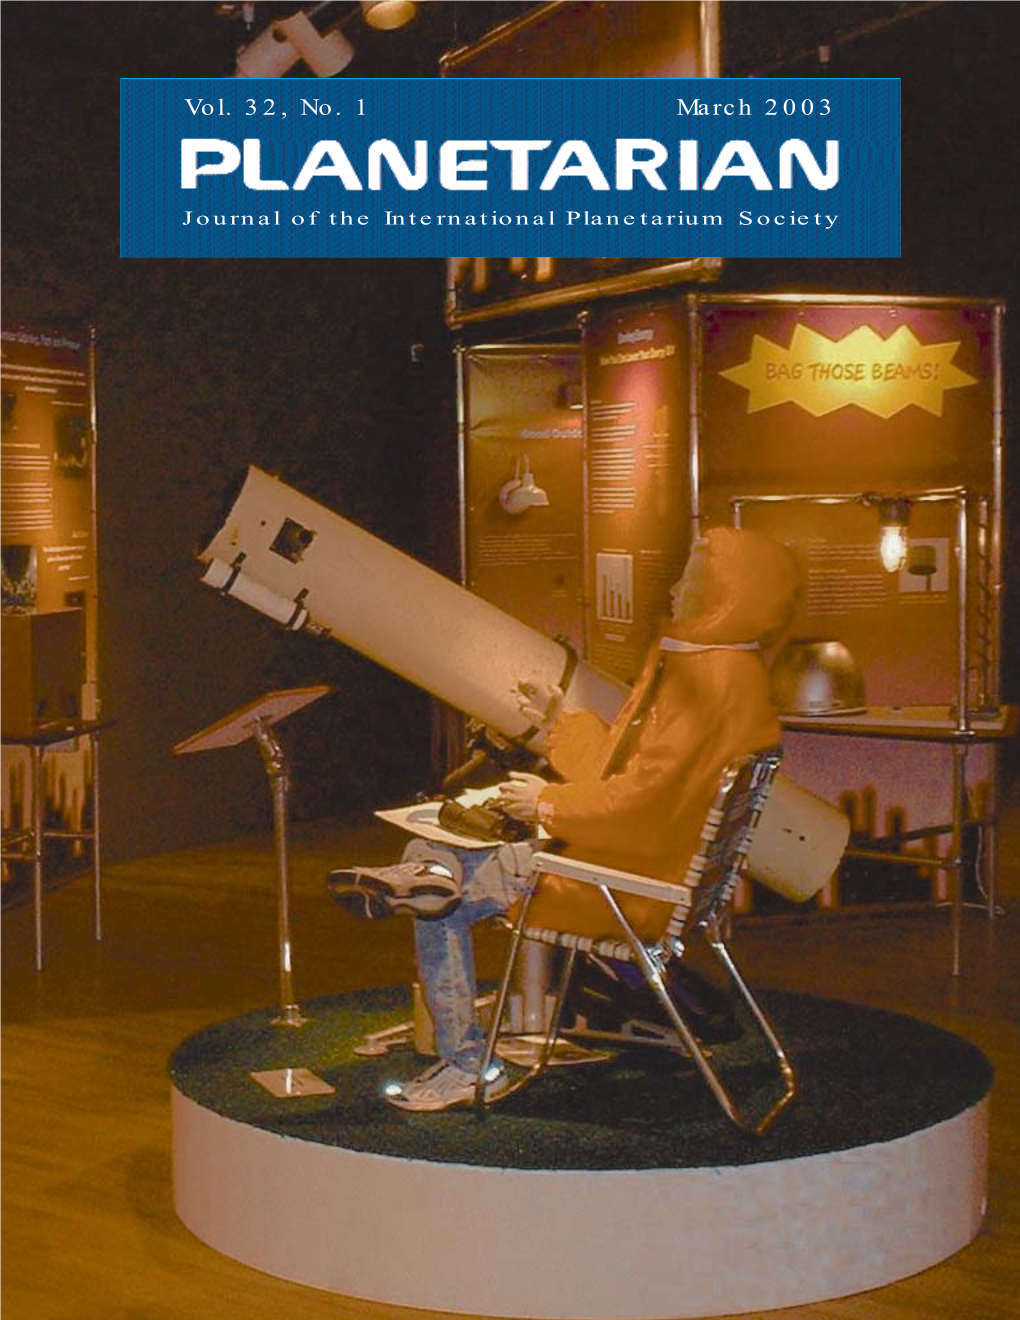 Journal of the International Planetarium Society